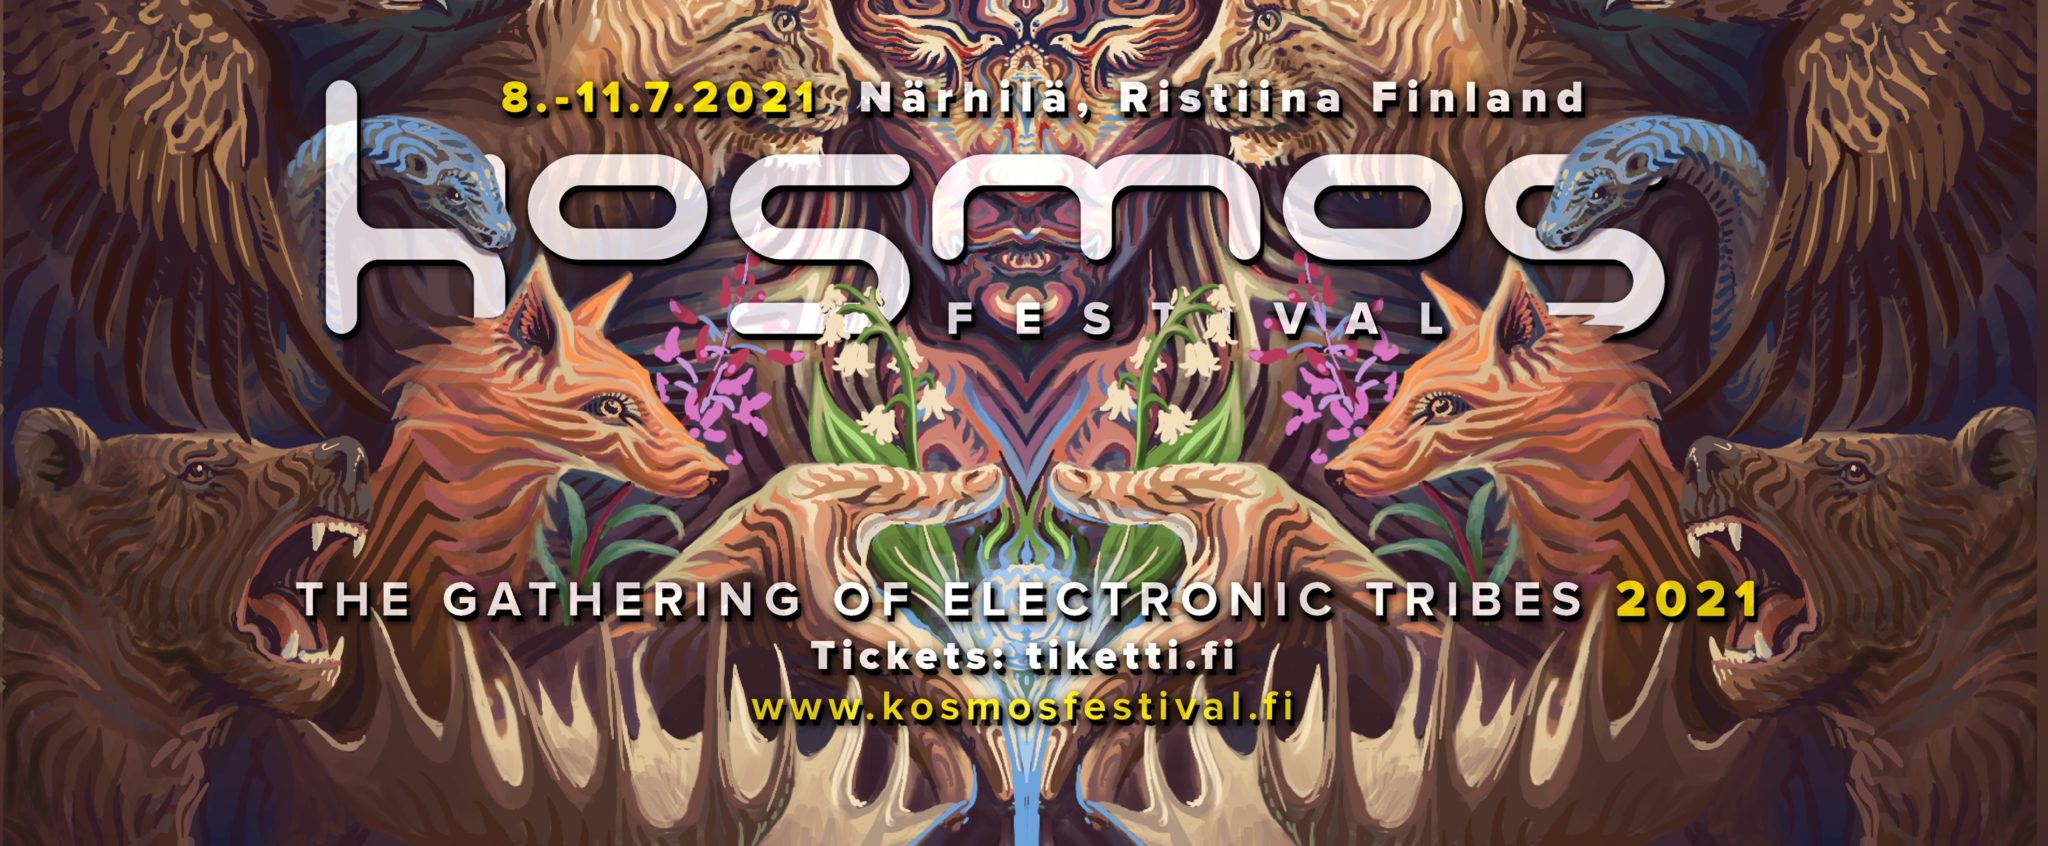 Kosmos Festival - Small Festivals & Retreats in Europe